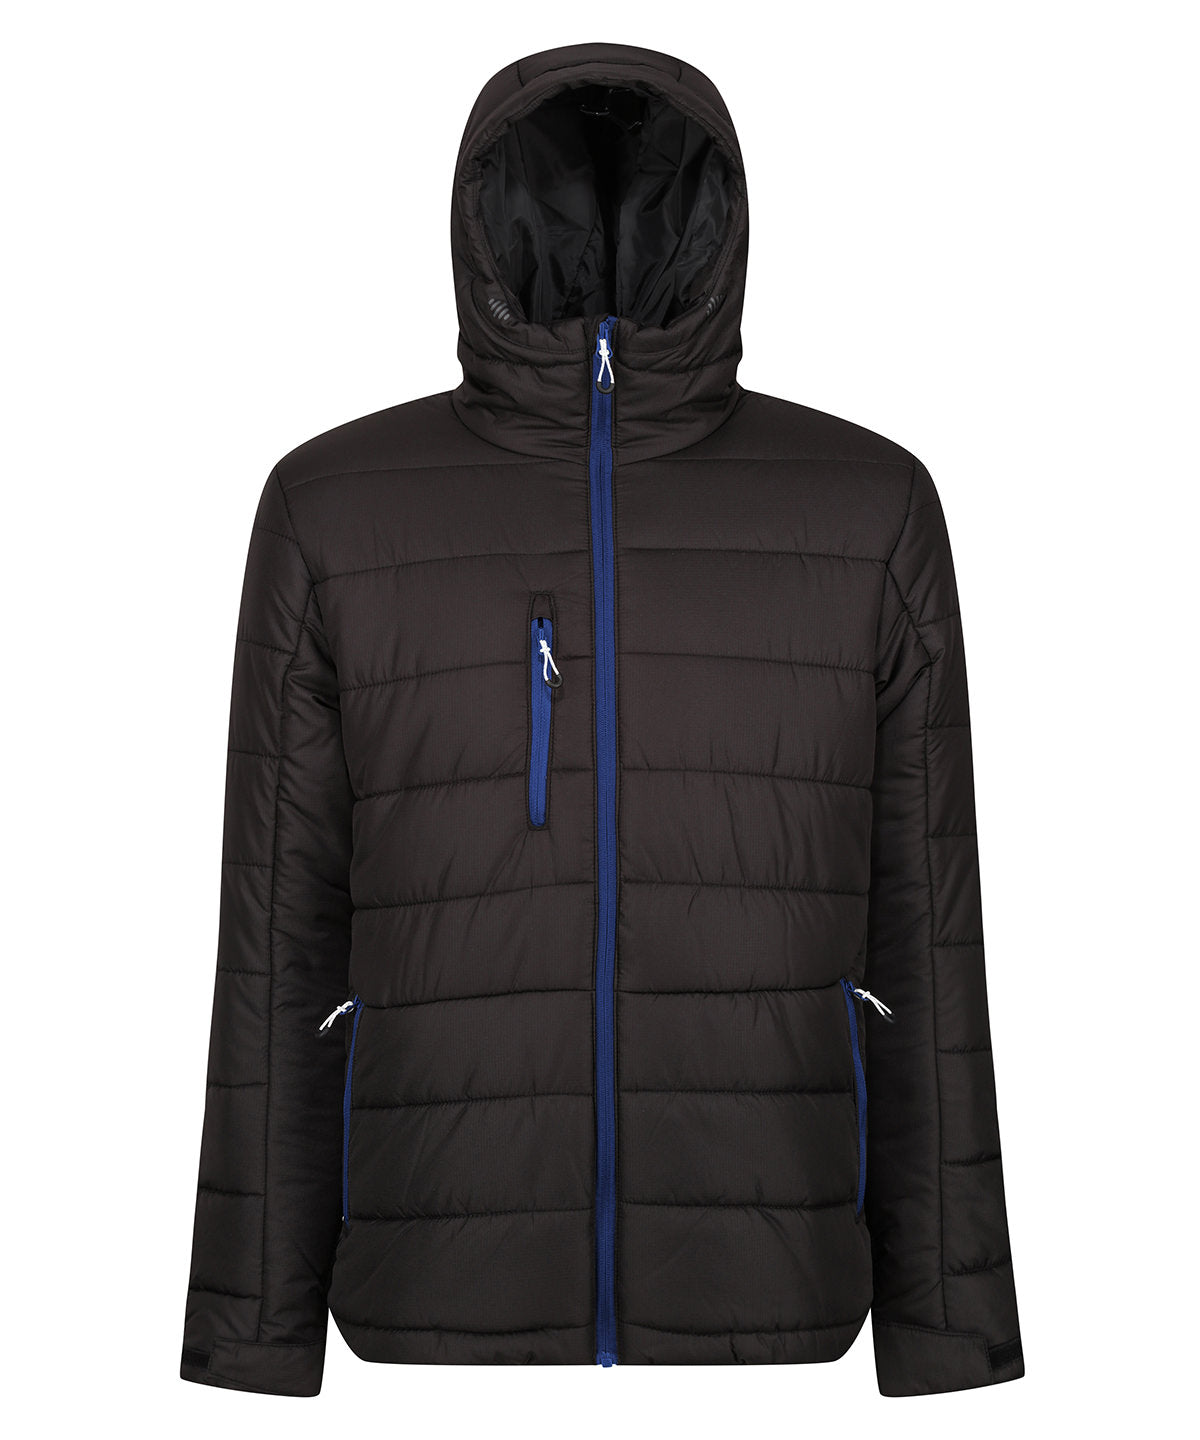 Jakkar - Navigate Thermal Hooded Jacket